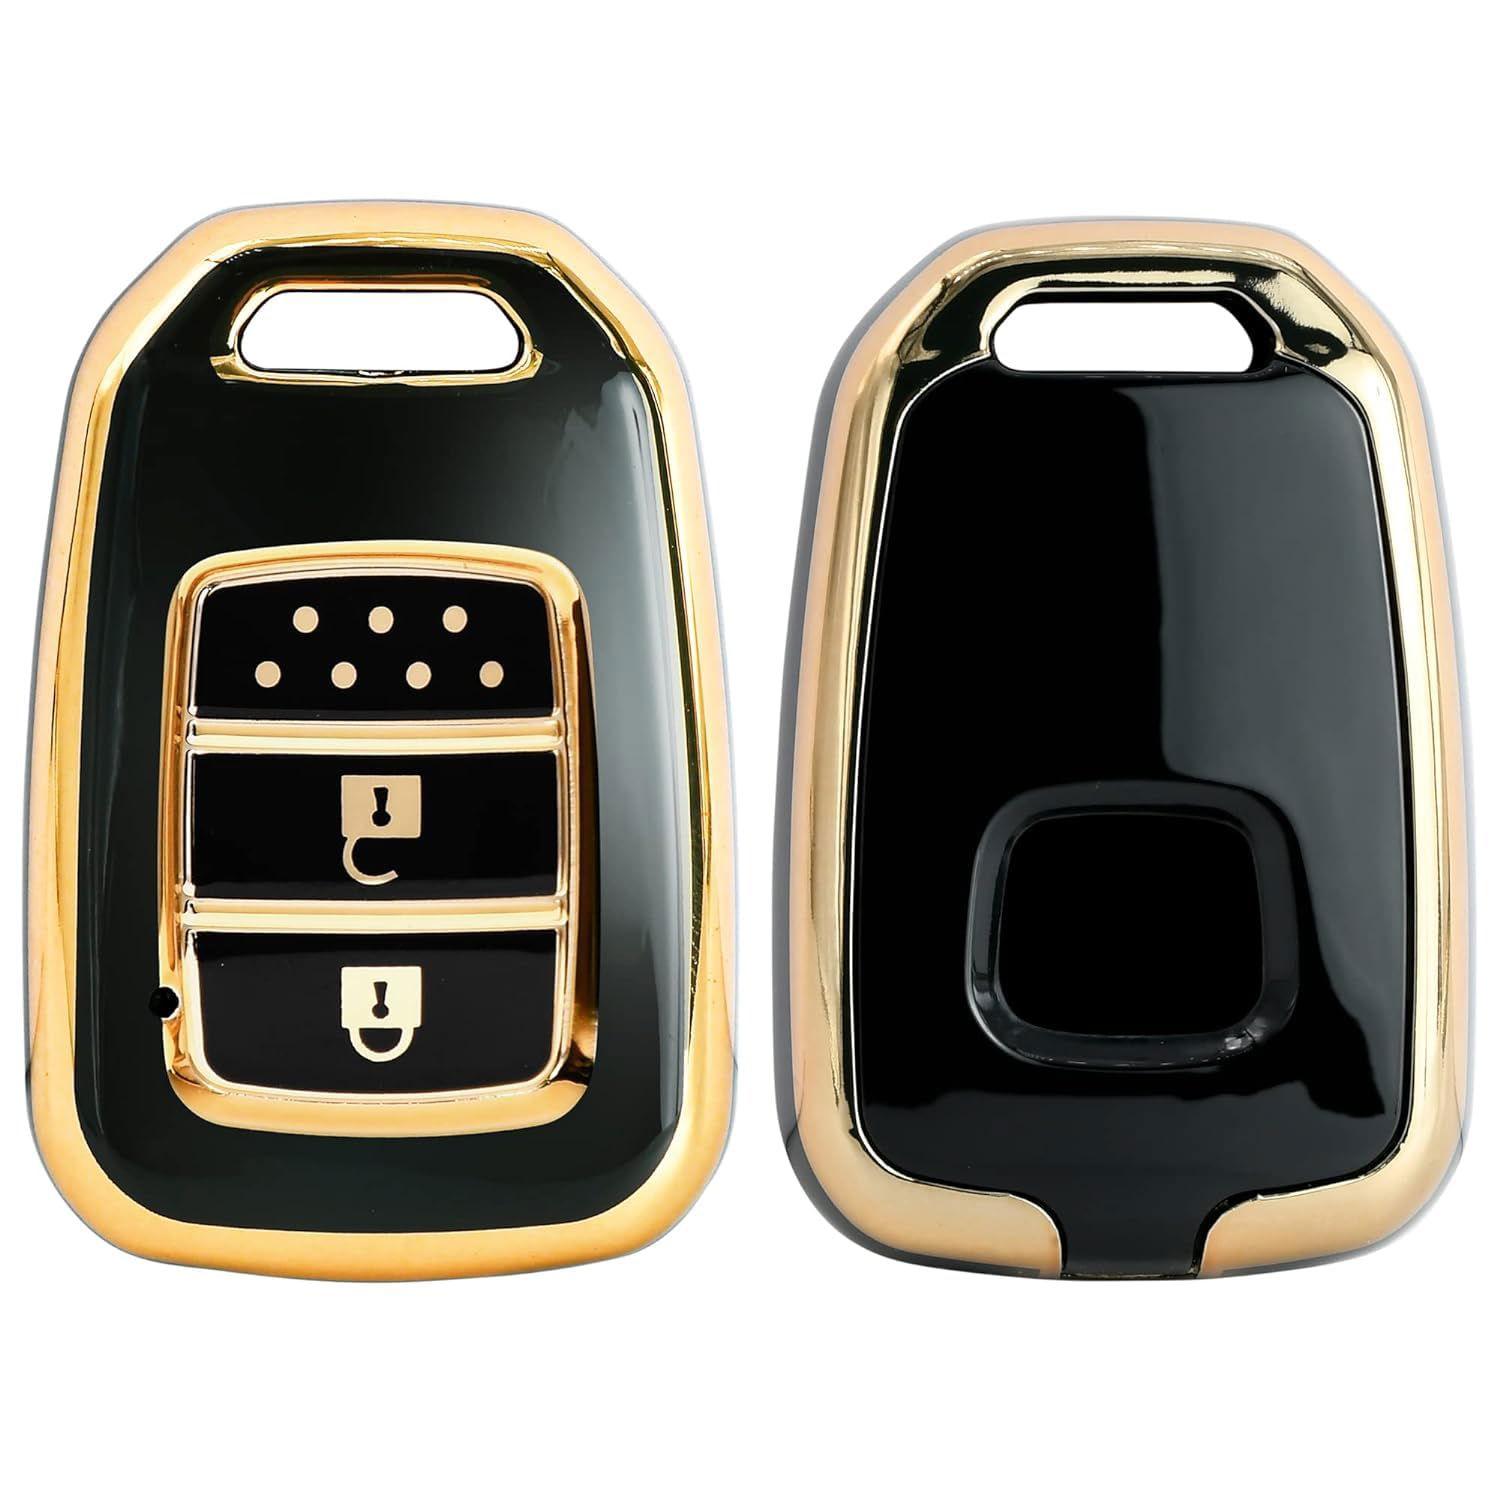 TPU Car Key Cover Compatible with Hon-da Jazz,City,WRV,BRV (2014 Onwards) 2Button Smart Key (Gold/Black) Image 